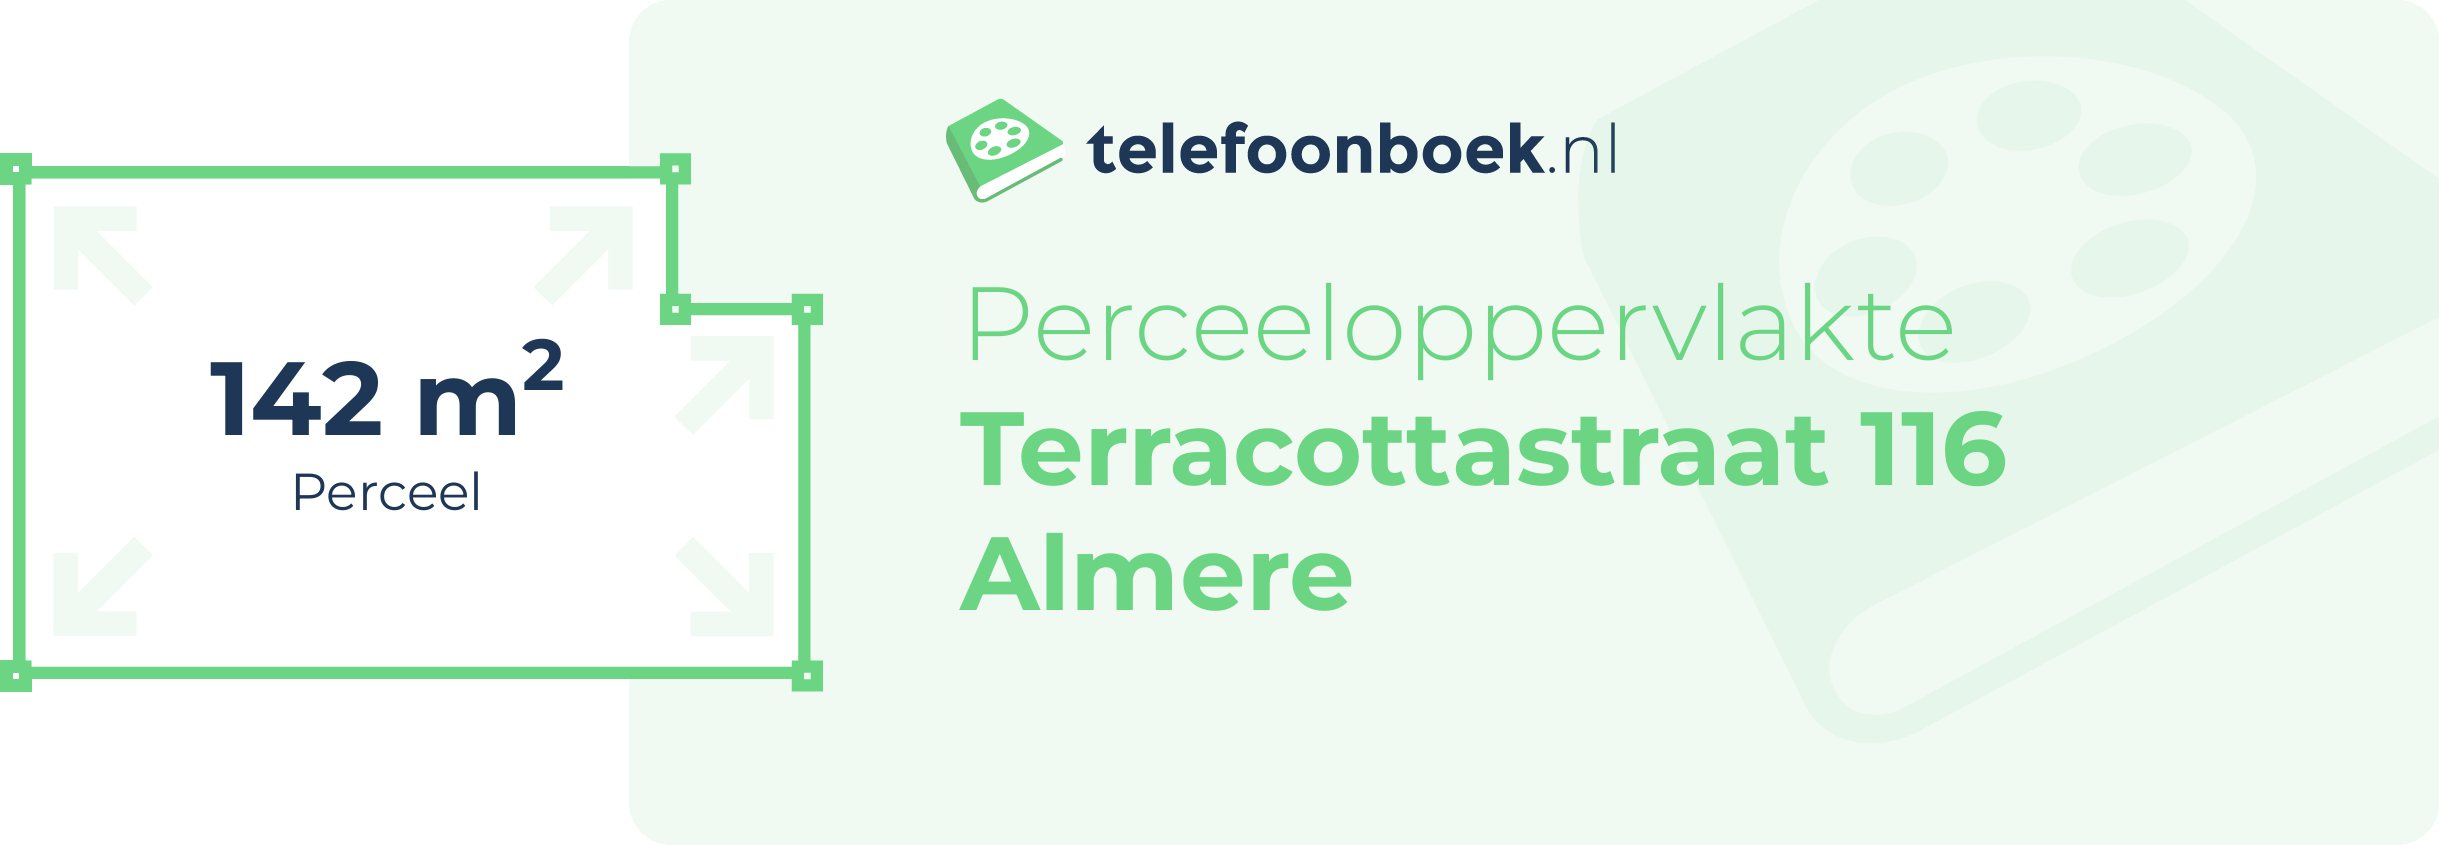 Perceeloppervlakte Terracottastraat 116 Almere